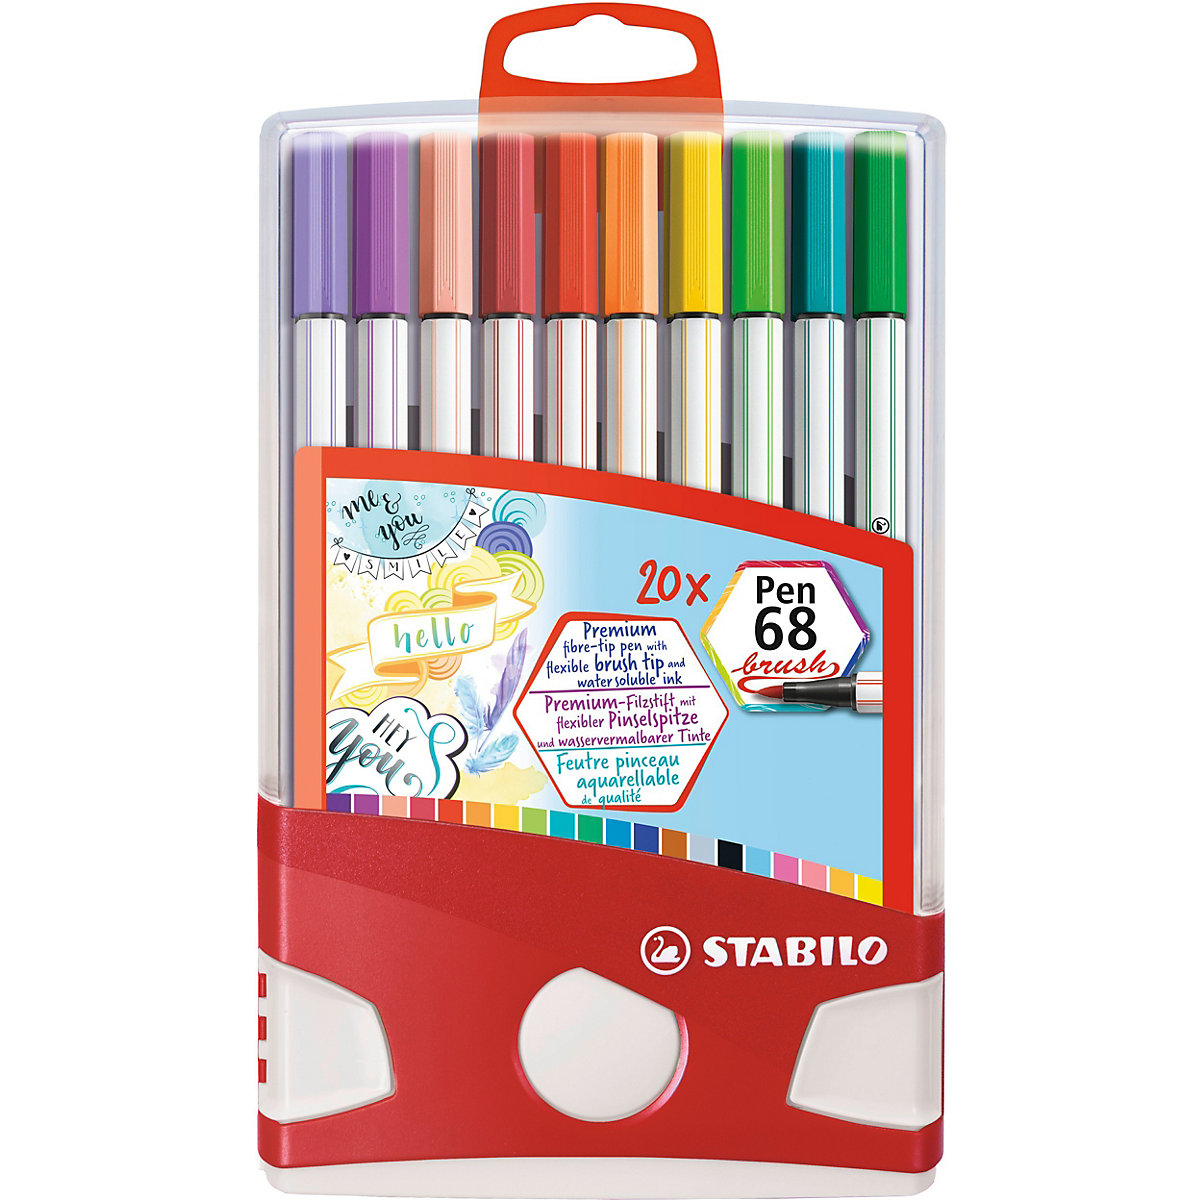 STABILO Premium-Filzstifte Pen 68 brush 20 Farben im Color Parade Tischset